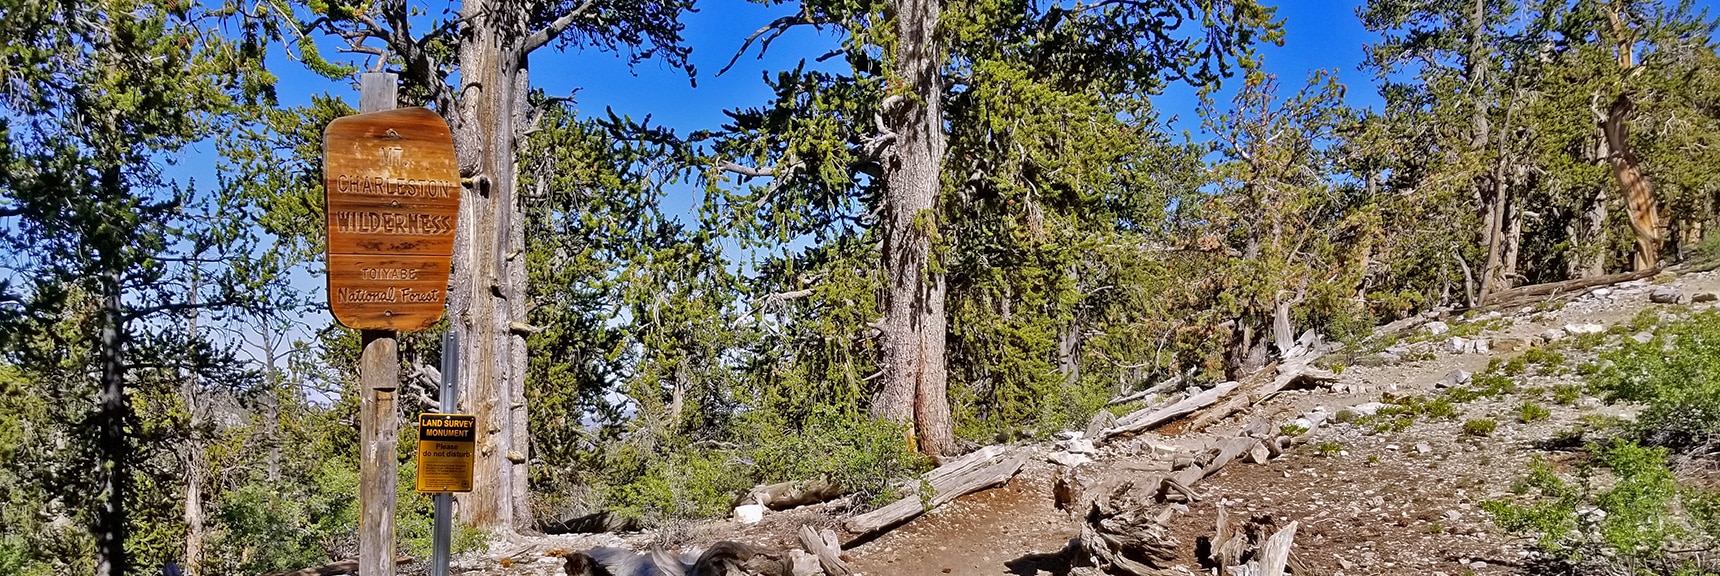 Entering Mt. Charleston Wilderness on the Bonanza Trail | Base of McFarland Peak via Bristlecone Pine Trail and Bonanza Trail | Lee Canyon | Spring Mountains, Nevada